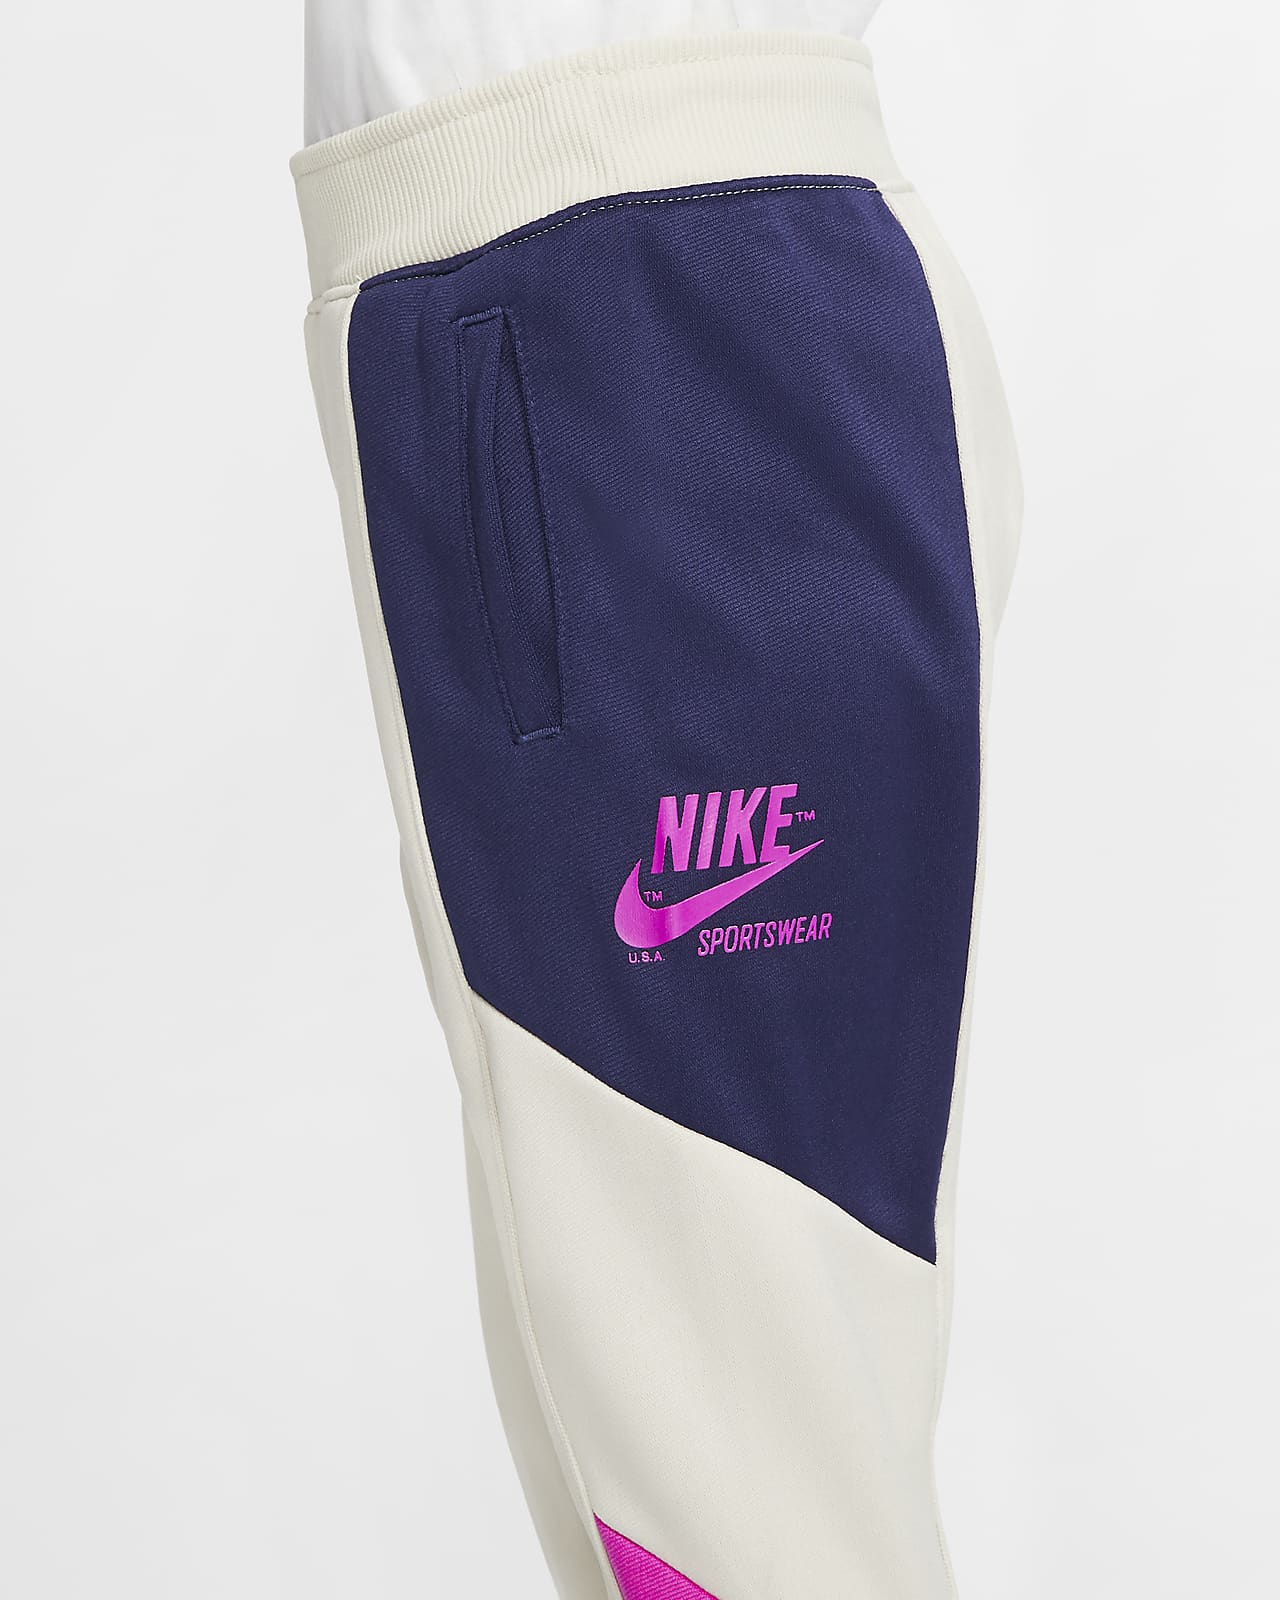 Sportswear Nike Cuffed Pants. Toddler